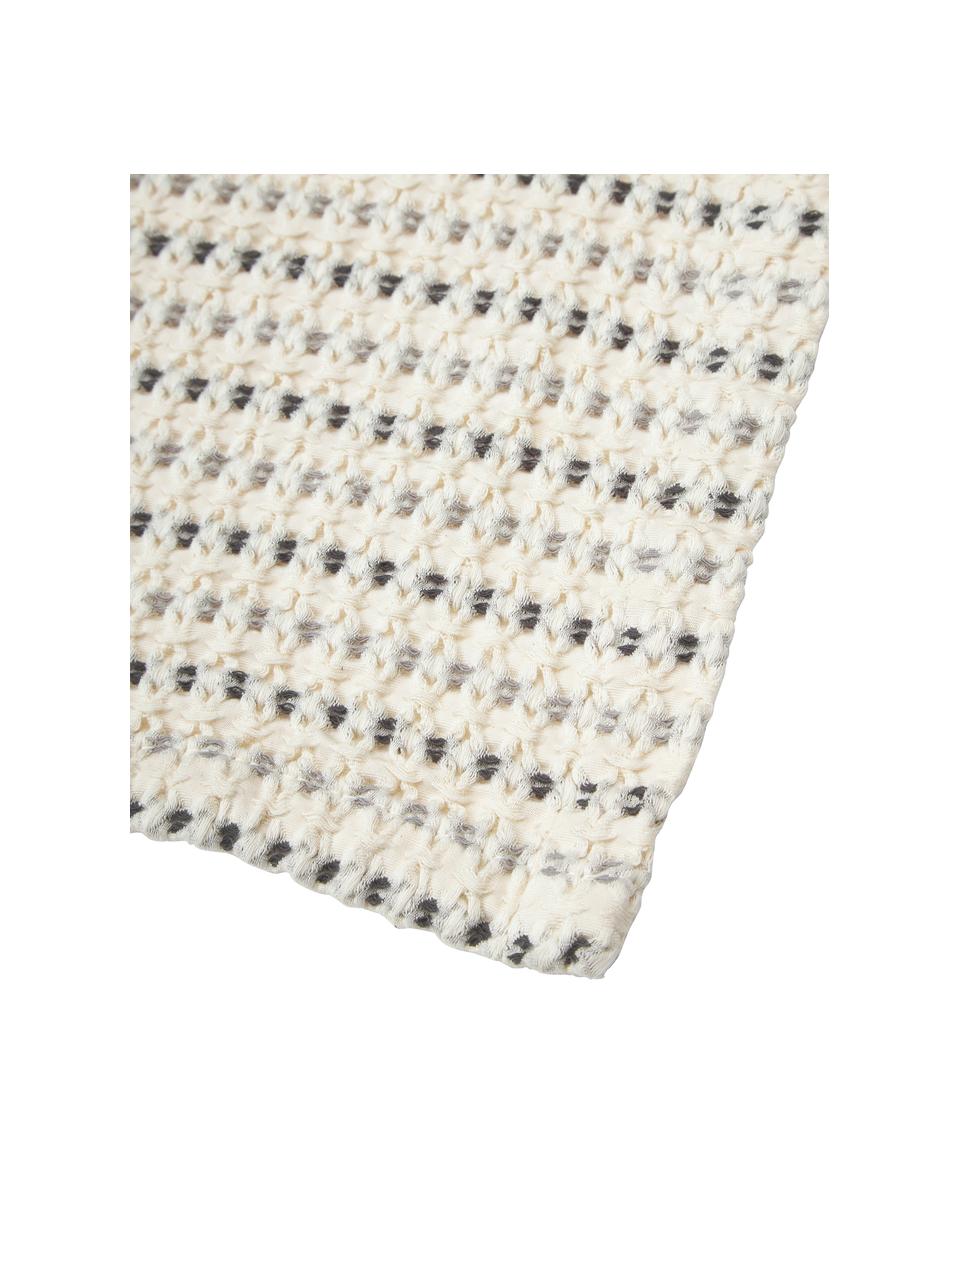 Coperta in cotone a nido d'ape Kimber, 100% cotone, Bianco crema, tonalità grigie, Larg. 130 x Lung. 170 cm